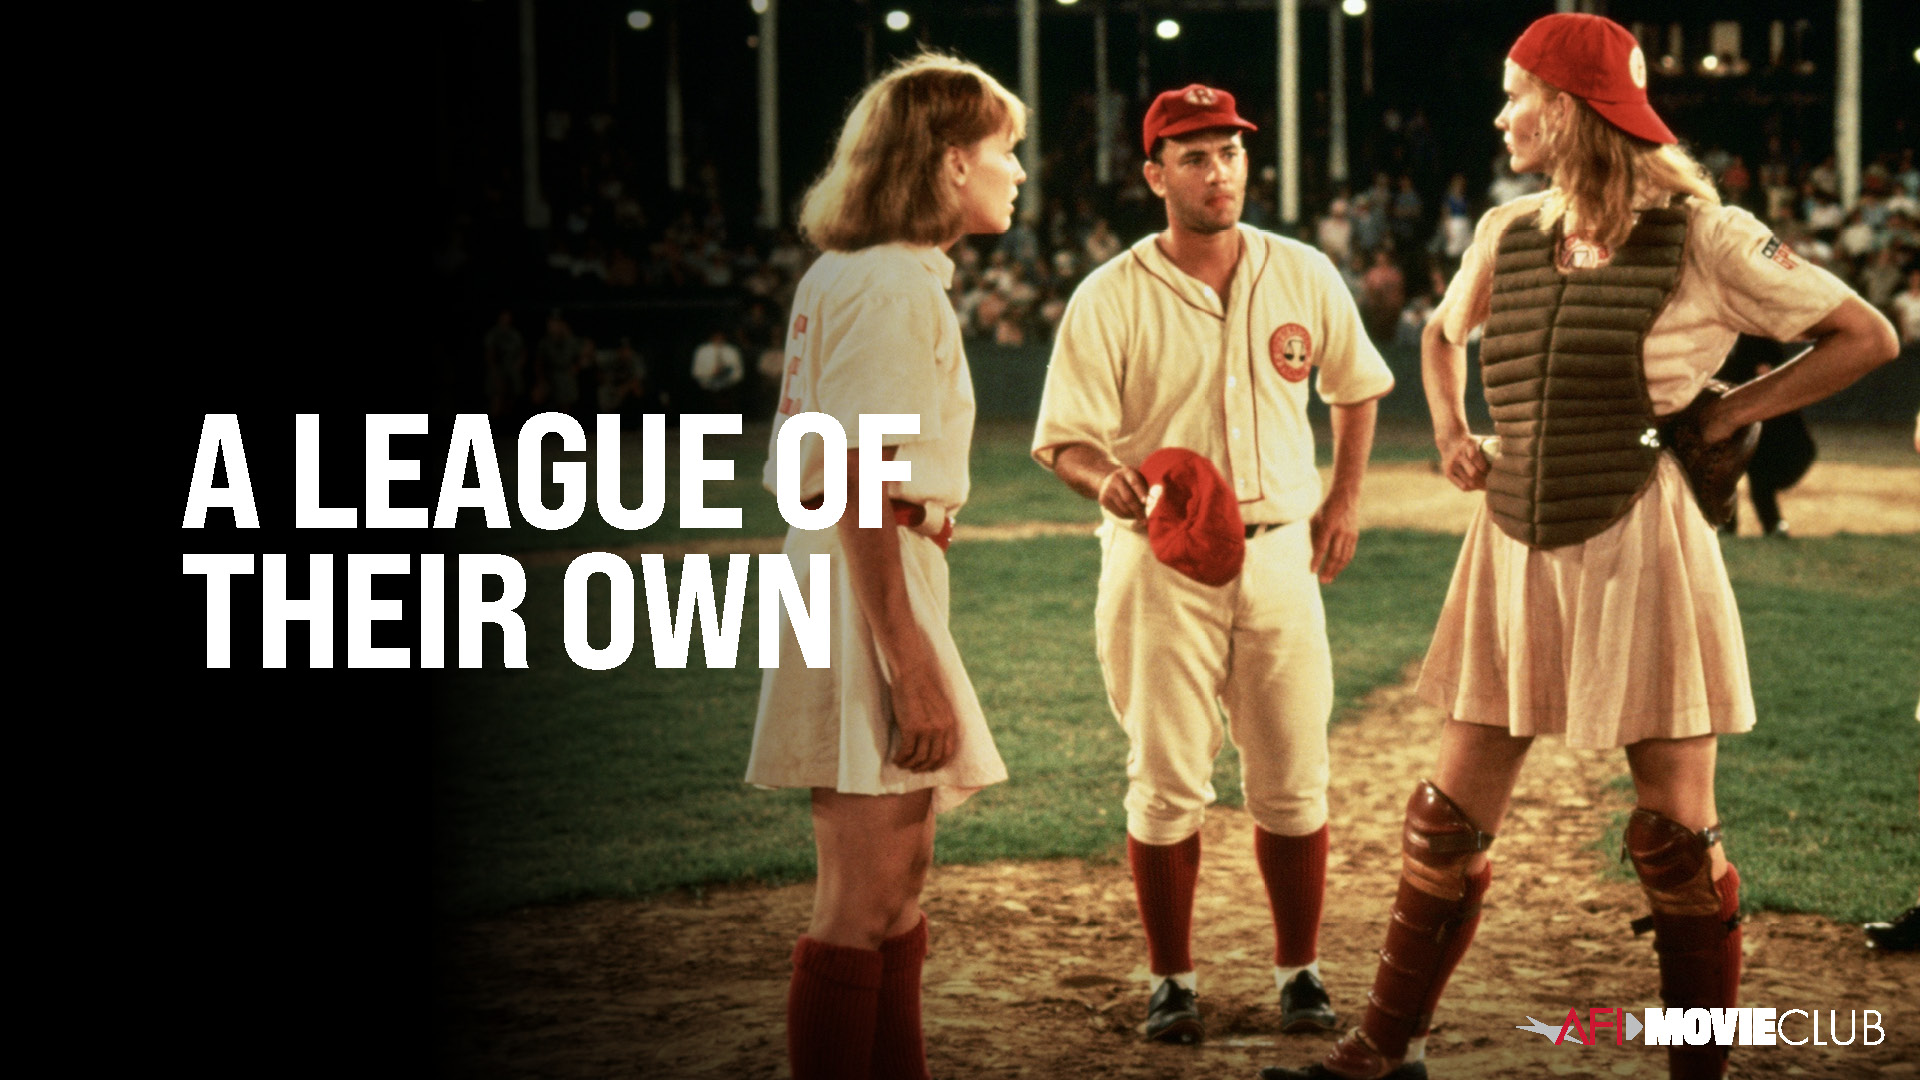 A League of Their Own - Geena Davis, Tom Hanks, and Lori Petty